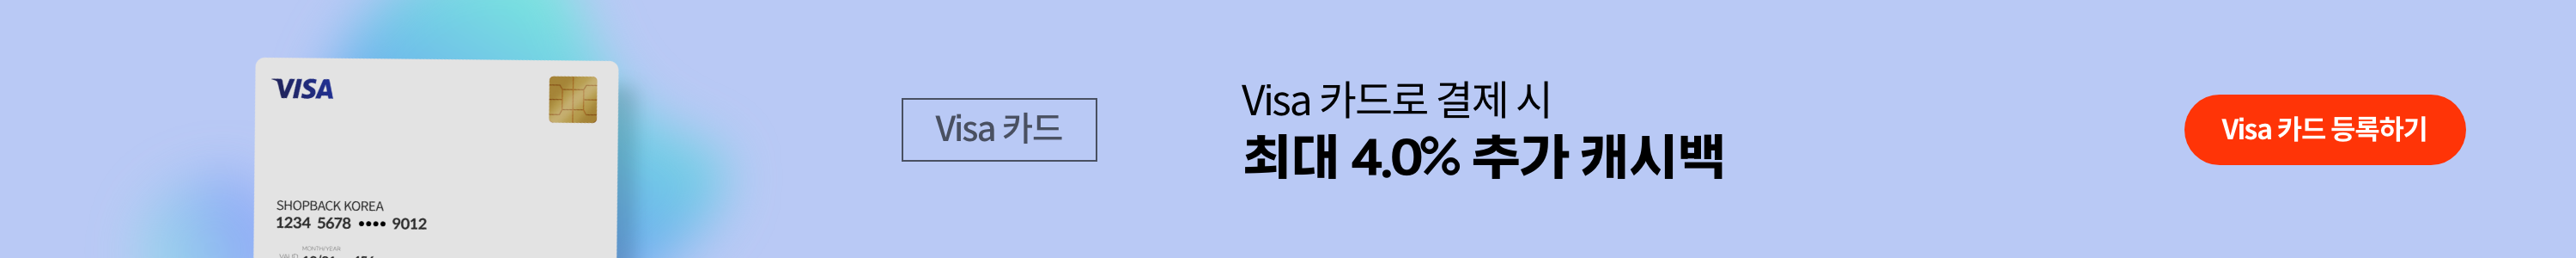 web_visa